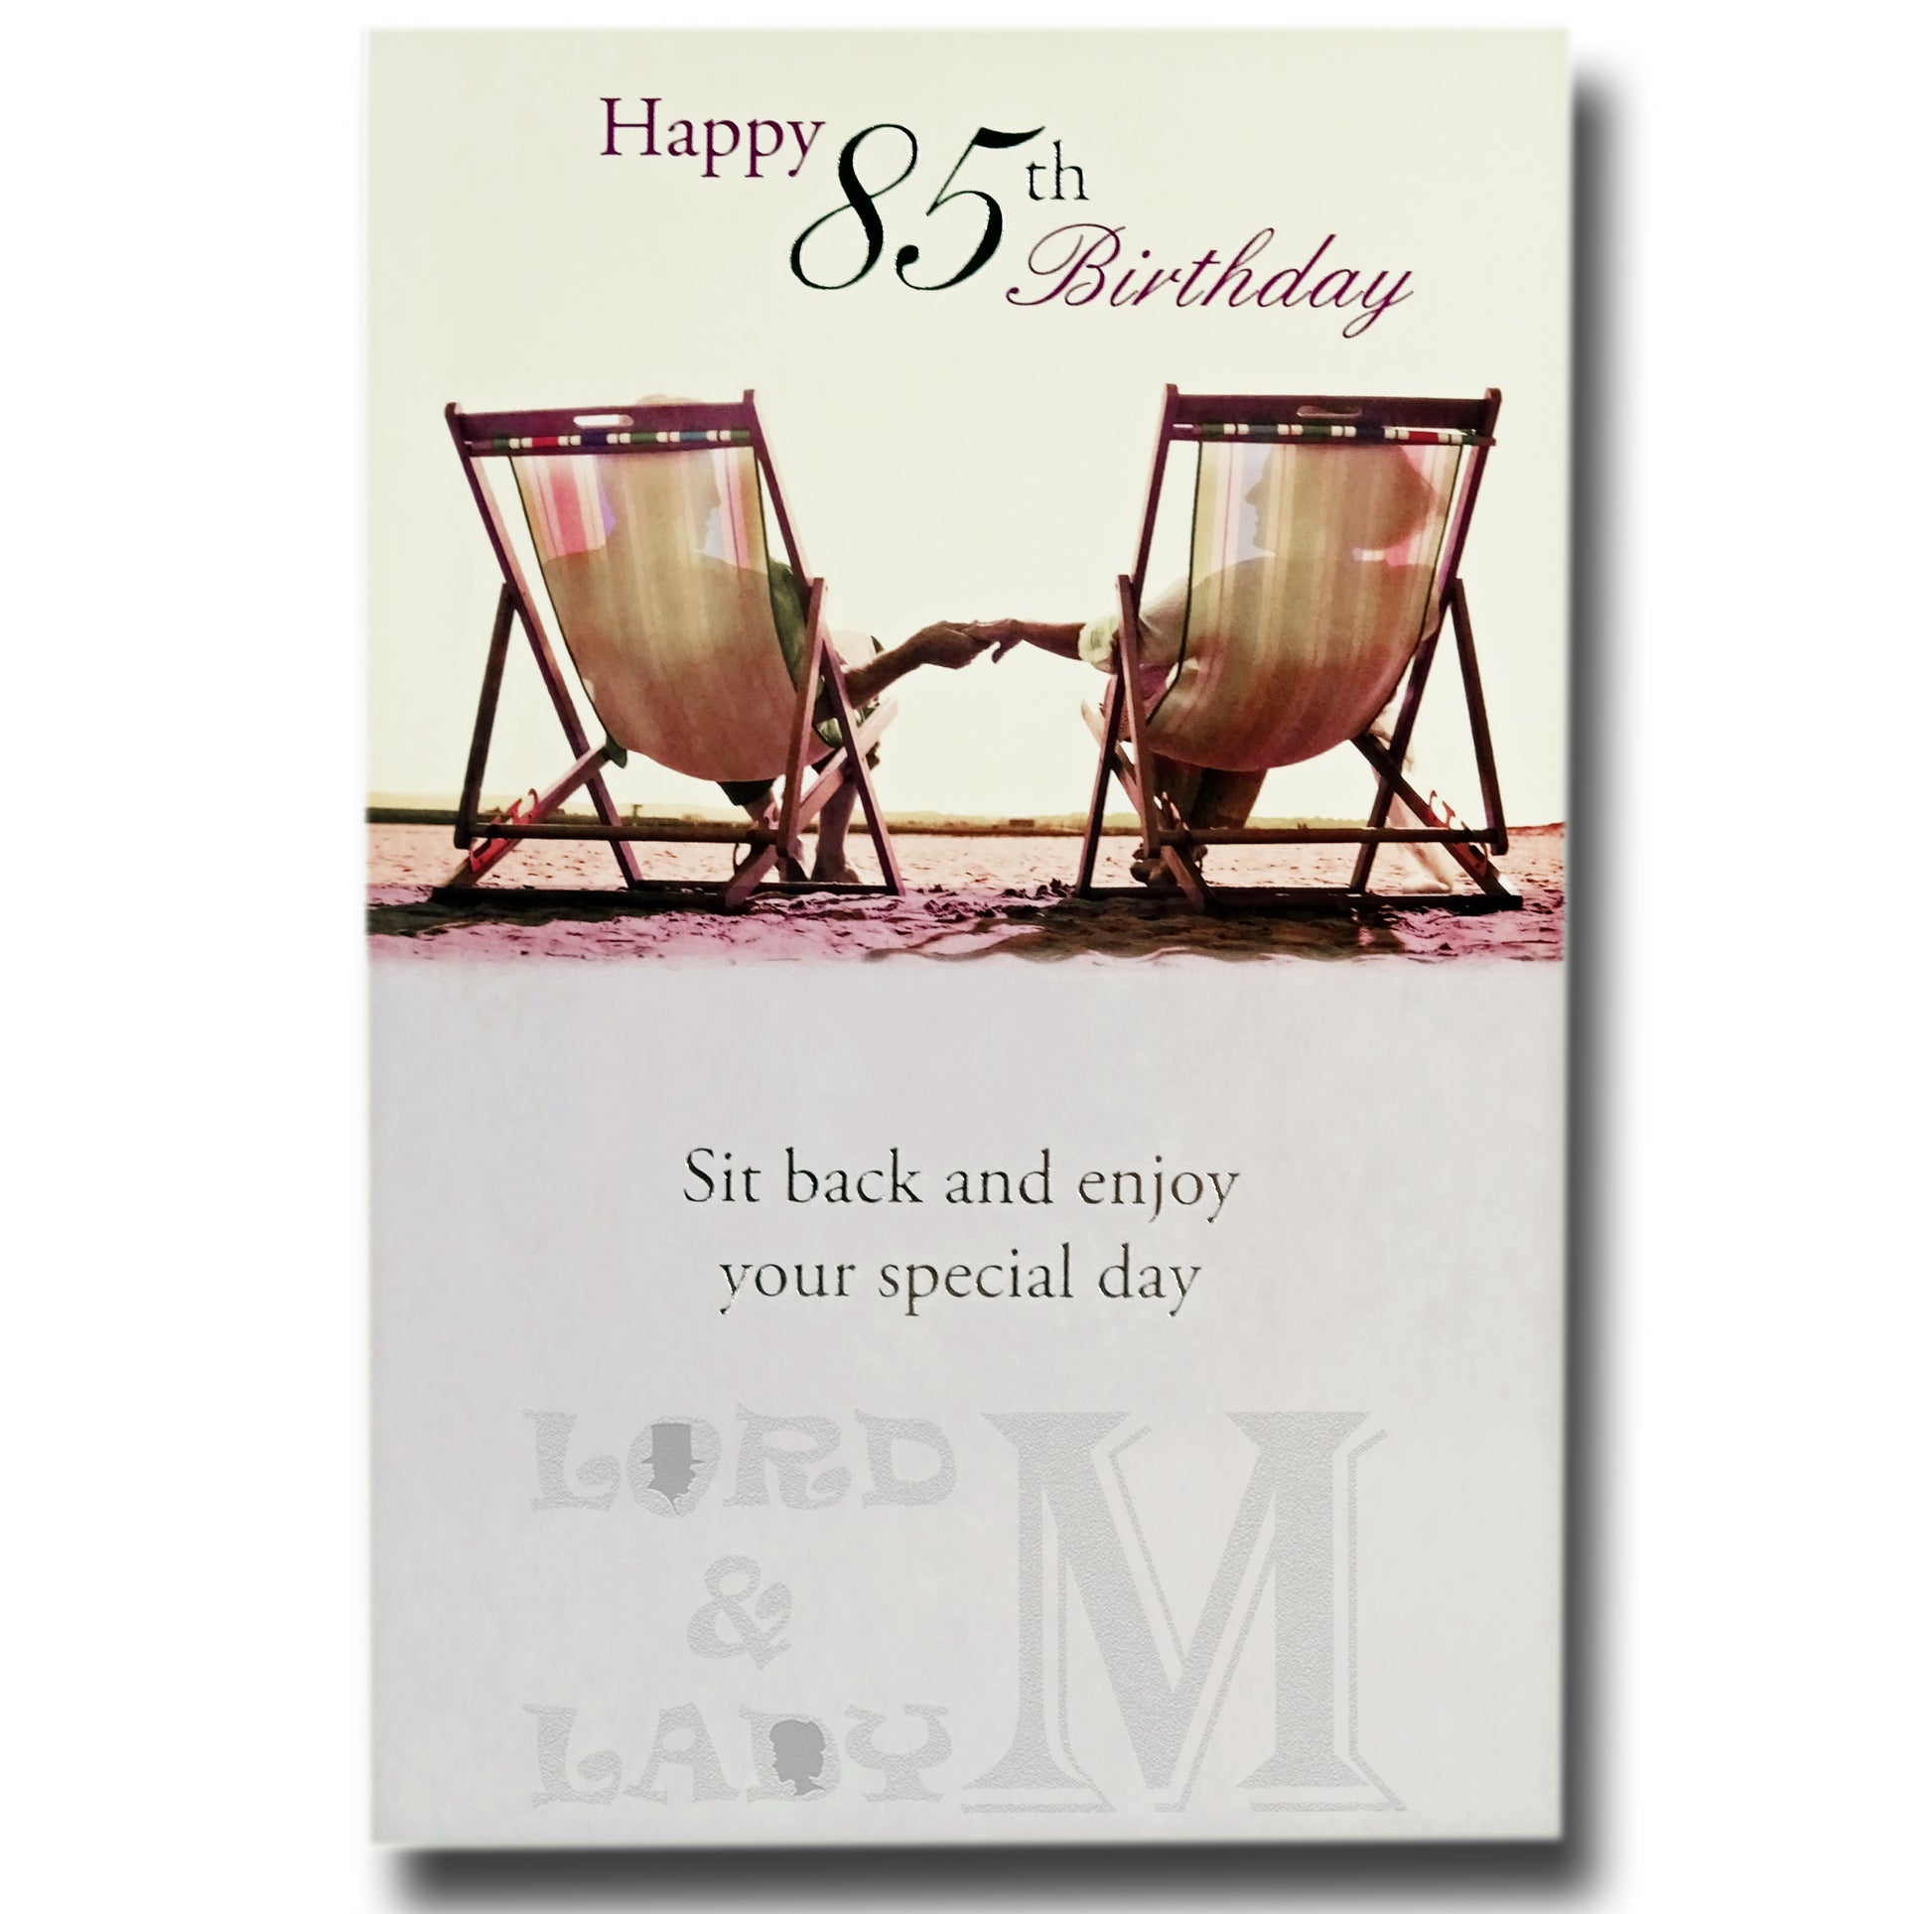 19cm - Happy 85th Birthday Sit Back And Enjoy - OH